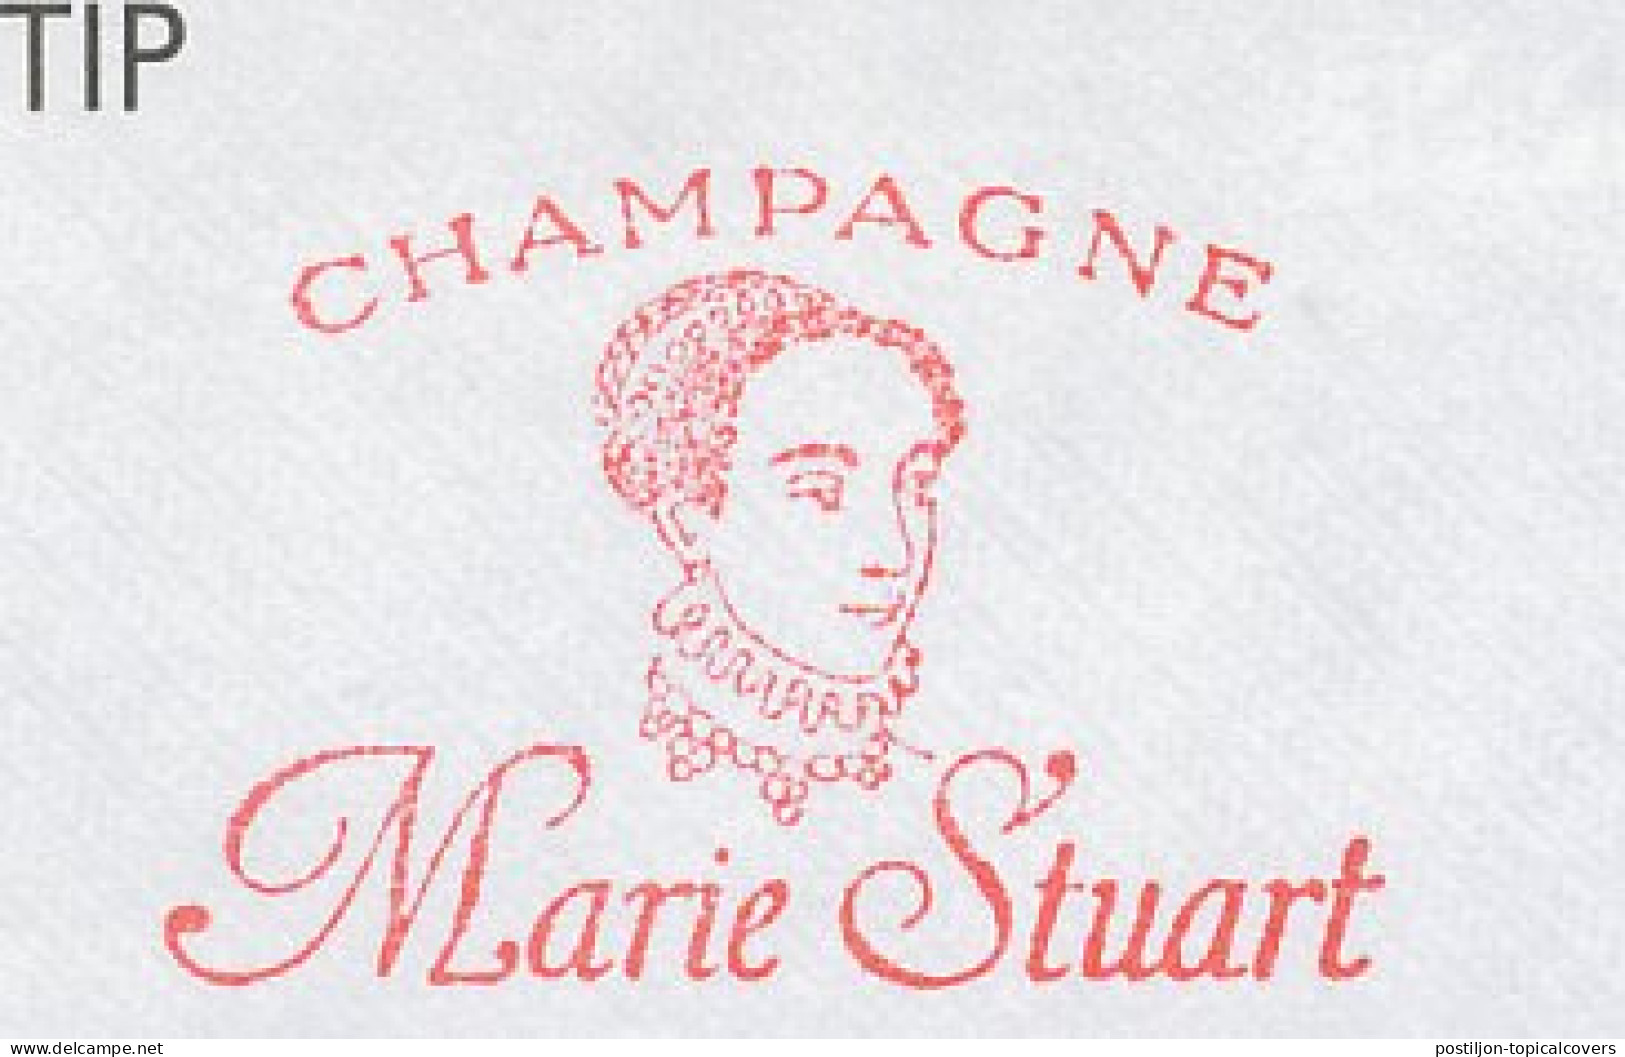 Meter Cover France 2003 Champagne - Marie Stuart - Vins & Alcools